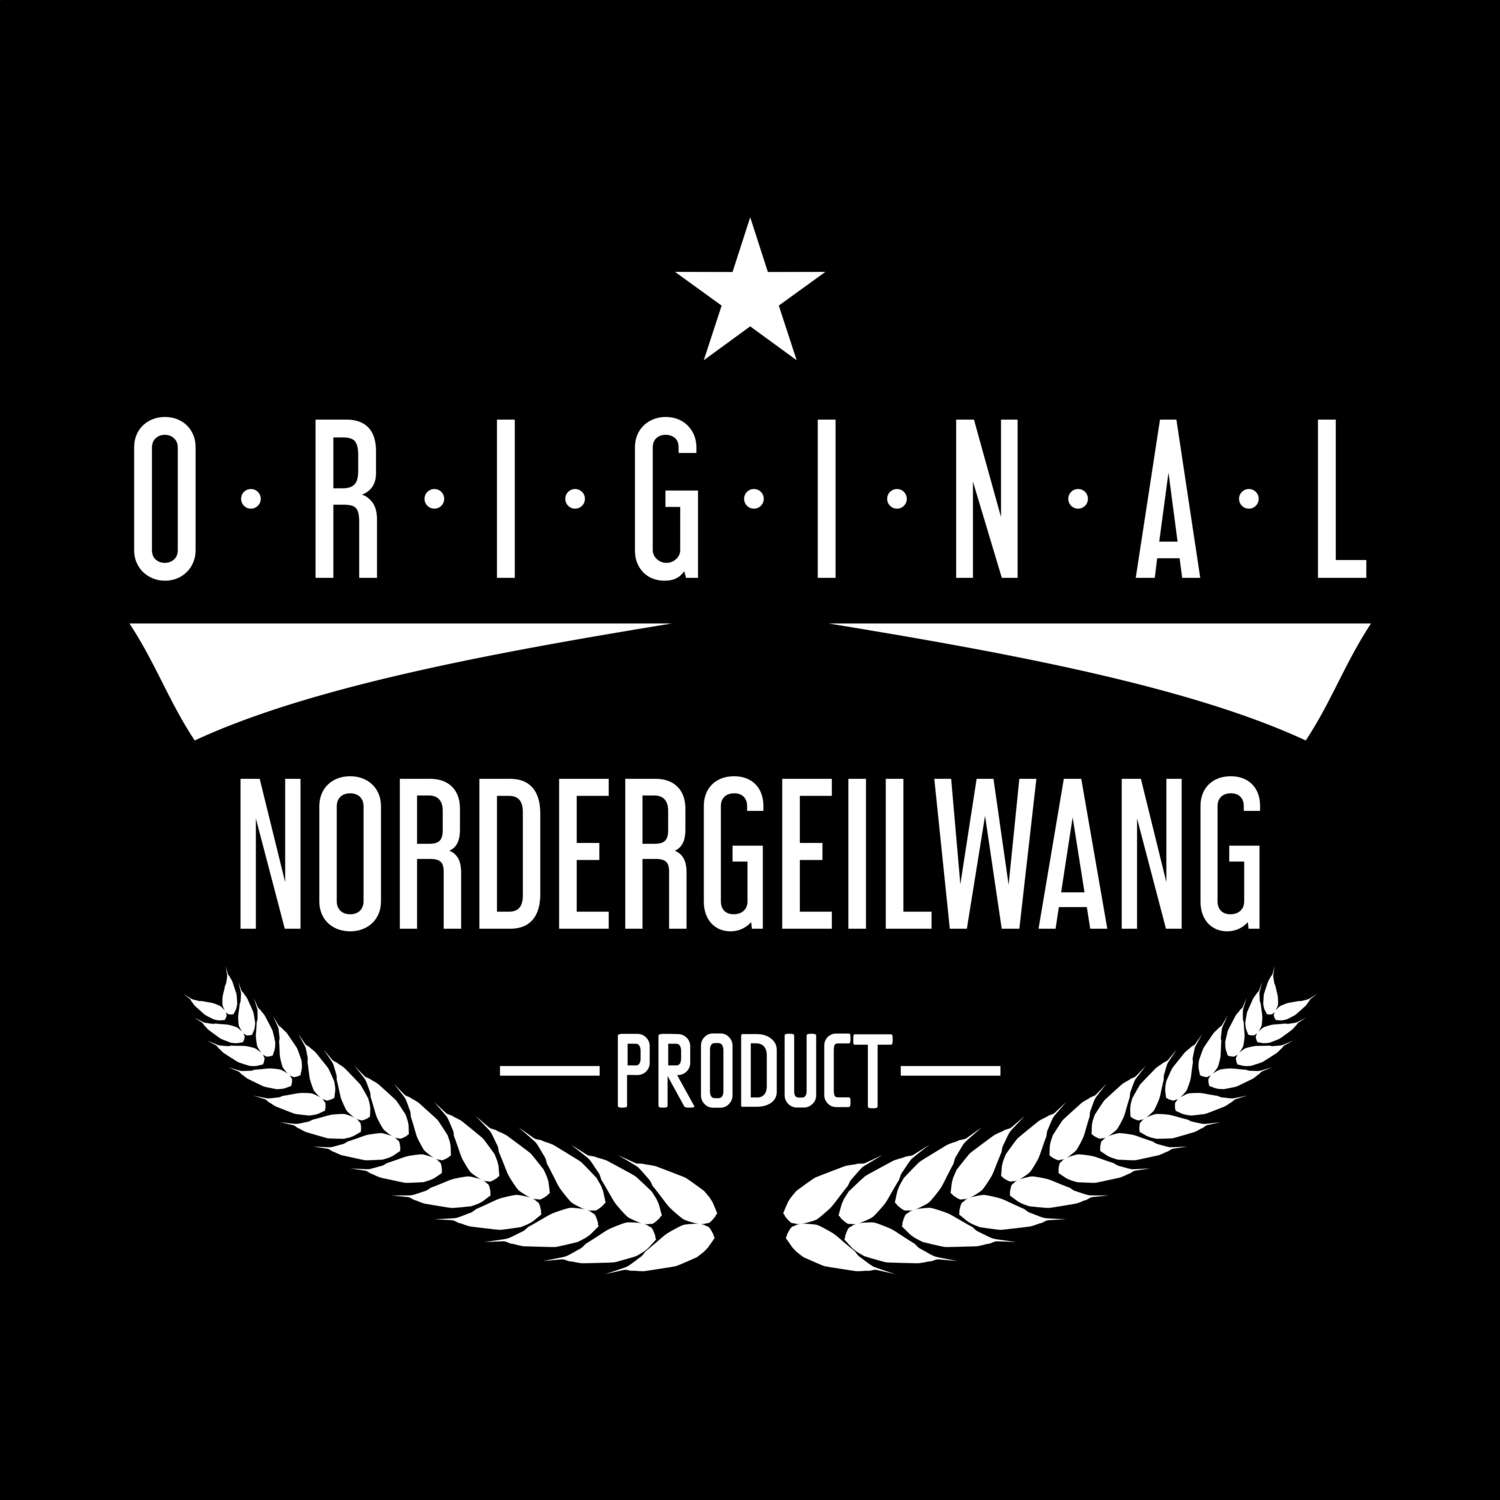 Nordergeilwang T-Shirt »Original Product«